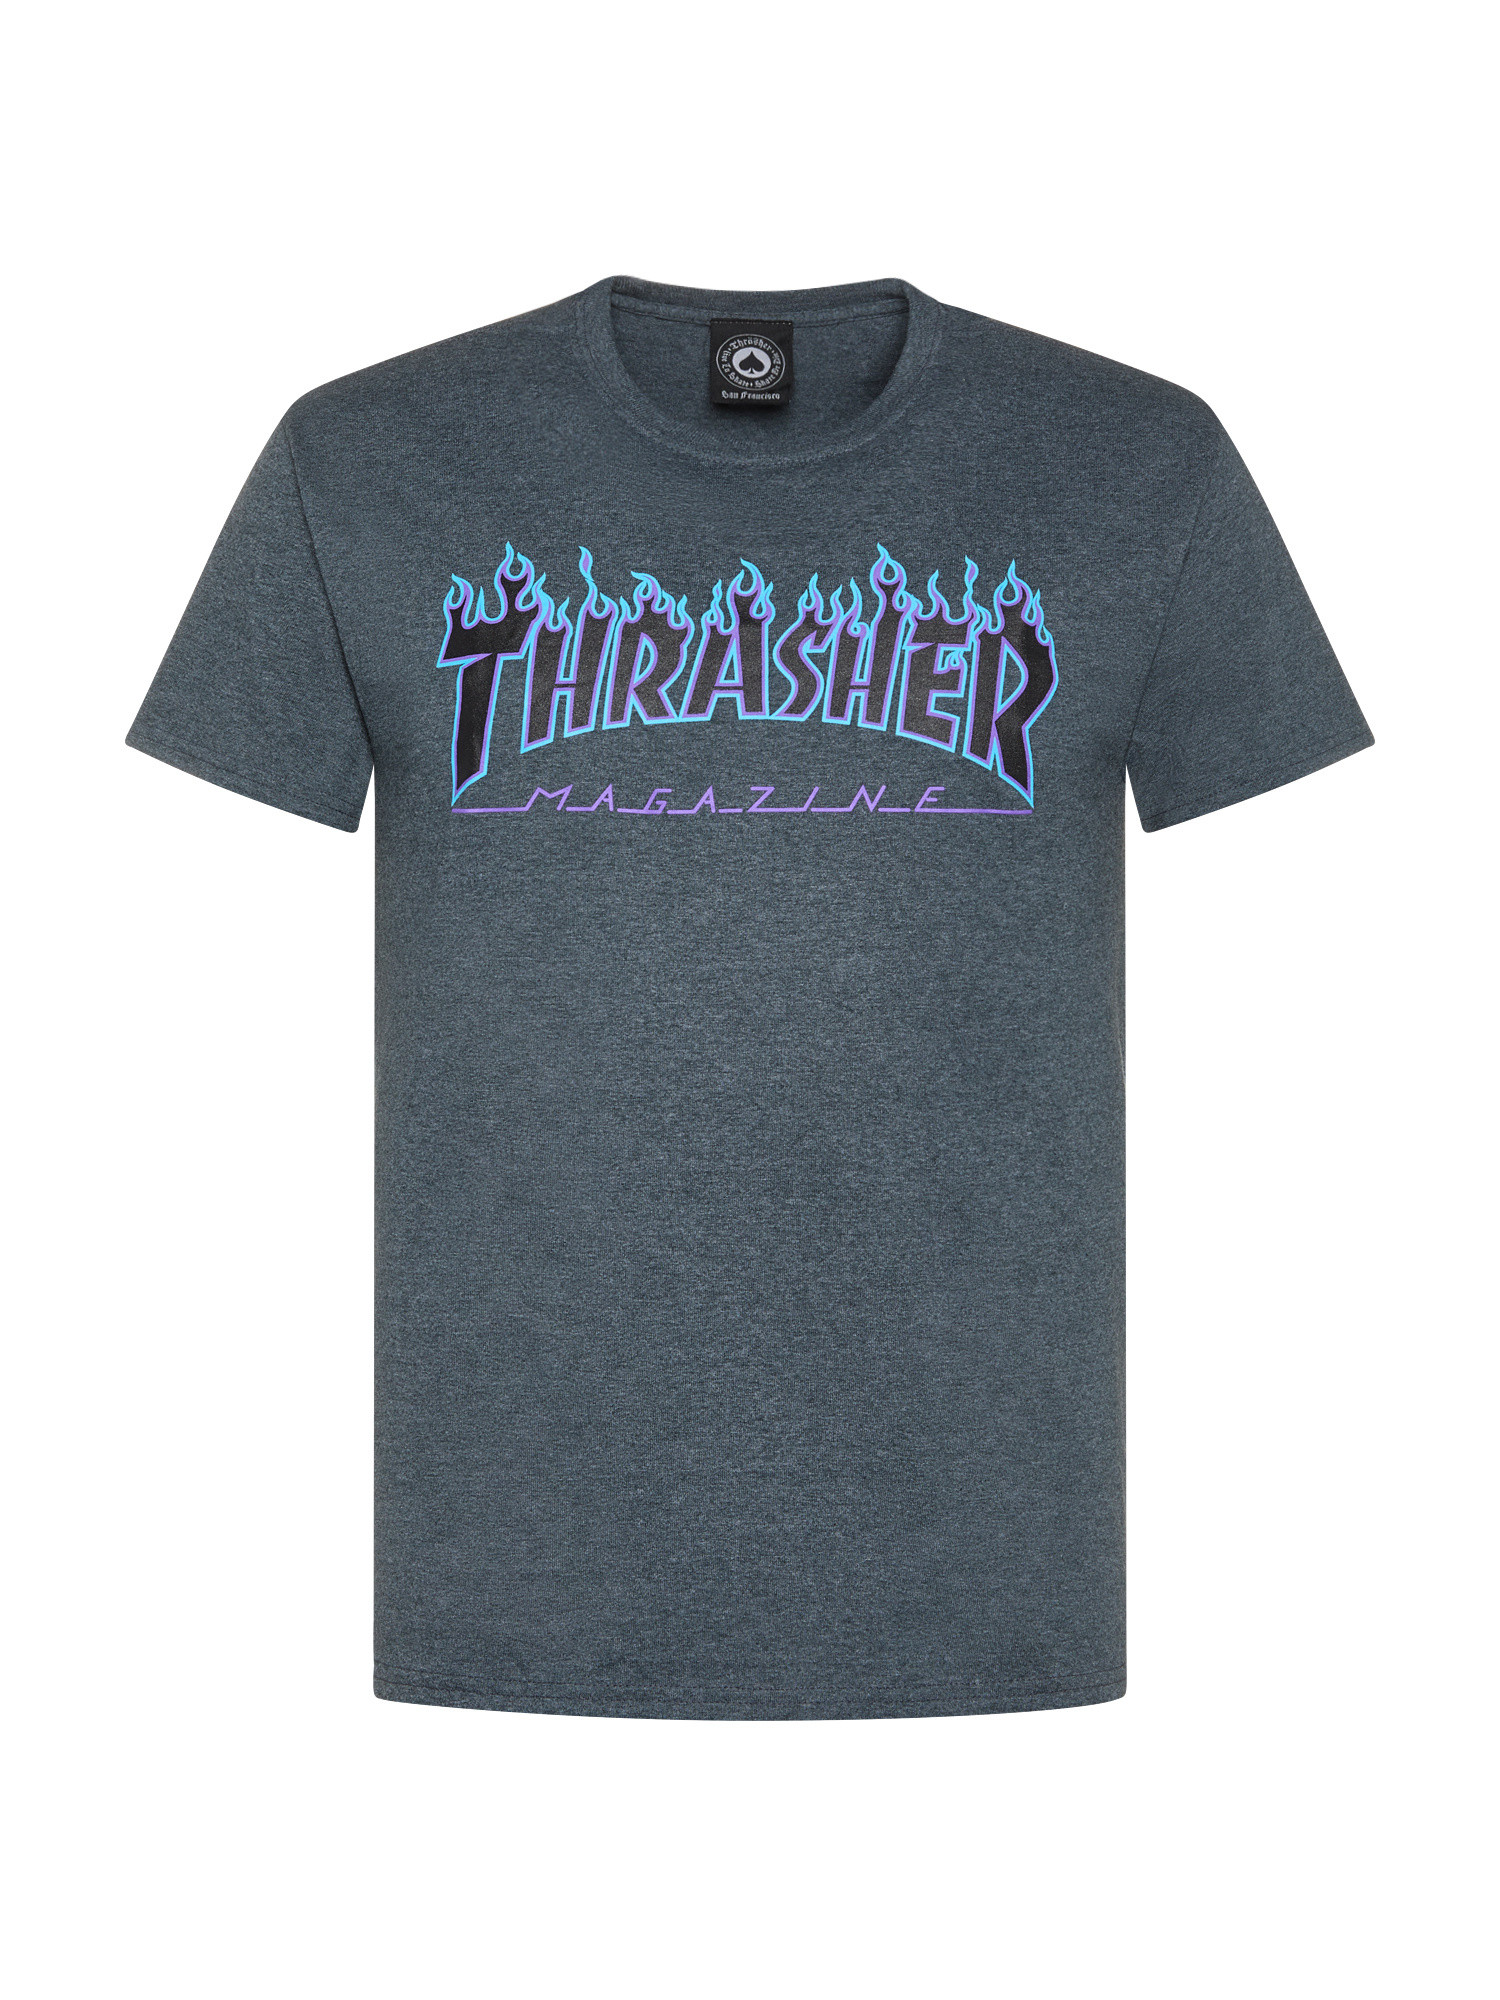 Thrasher - Flames logo T-Shirt, Dark Grey, large image number 0